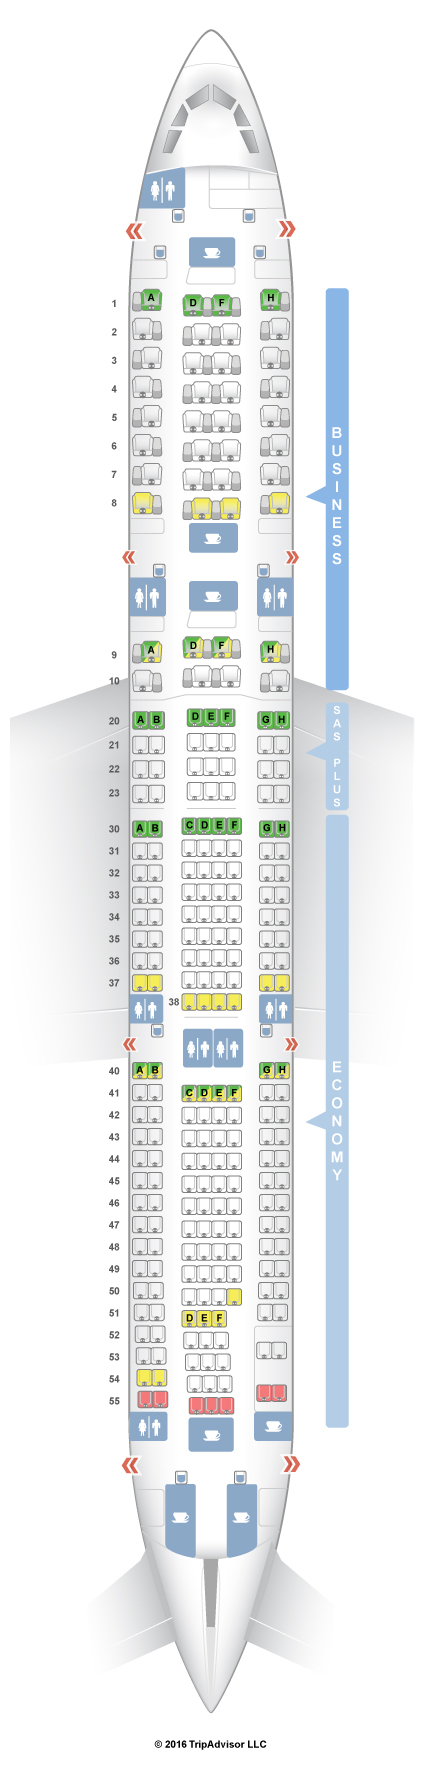 Airbus A330 300 Sas Seating Chart